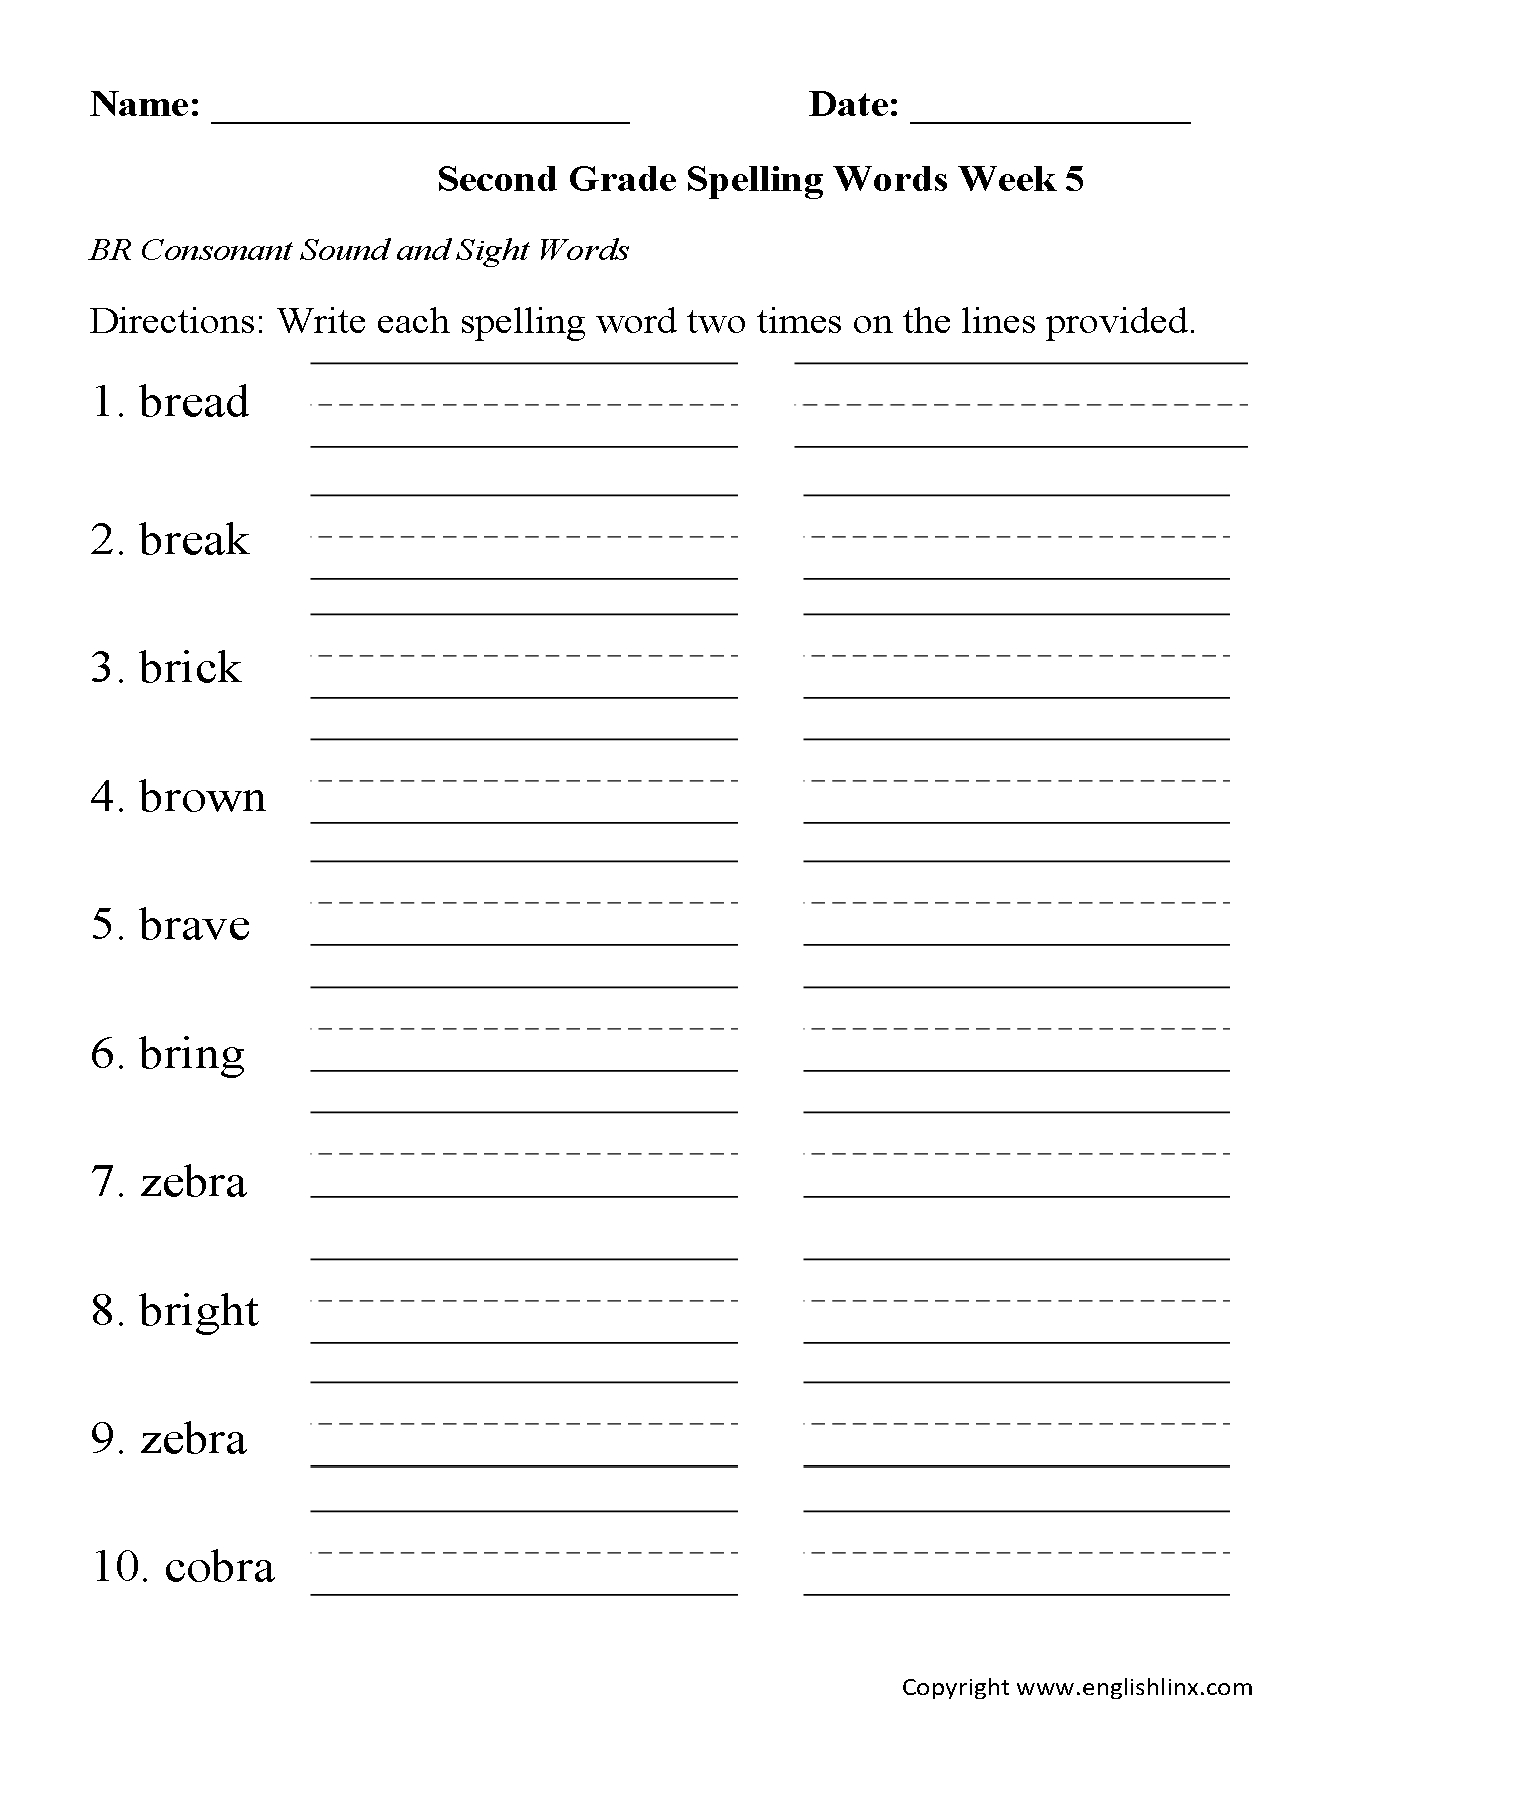 Spelling Worksheets | Second Grade Spelling Worksheets - Free Printable Spelling Practice Worksheets